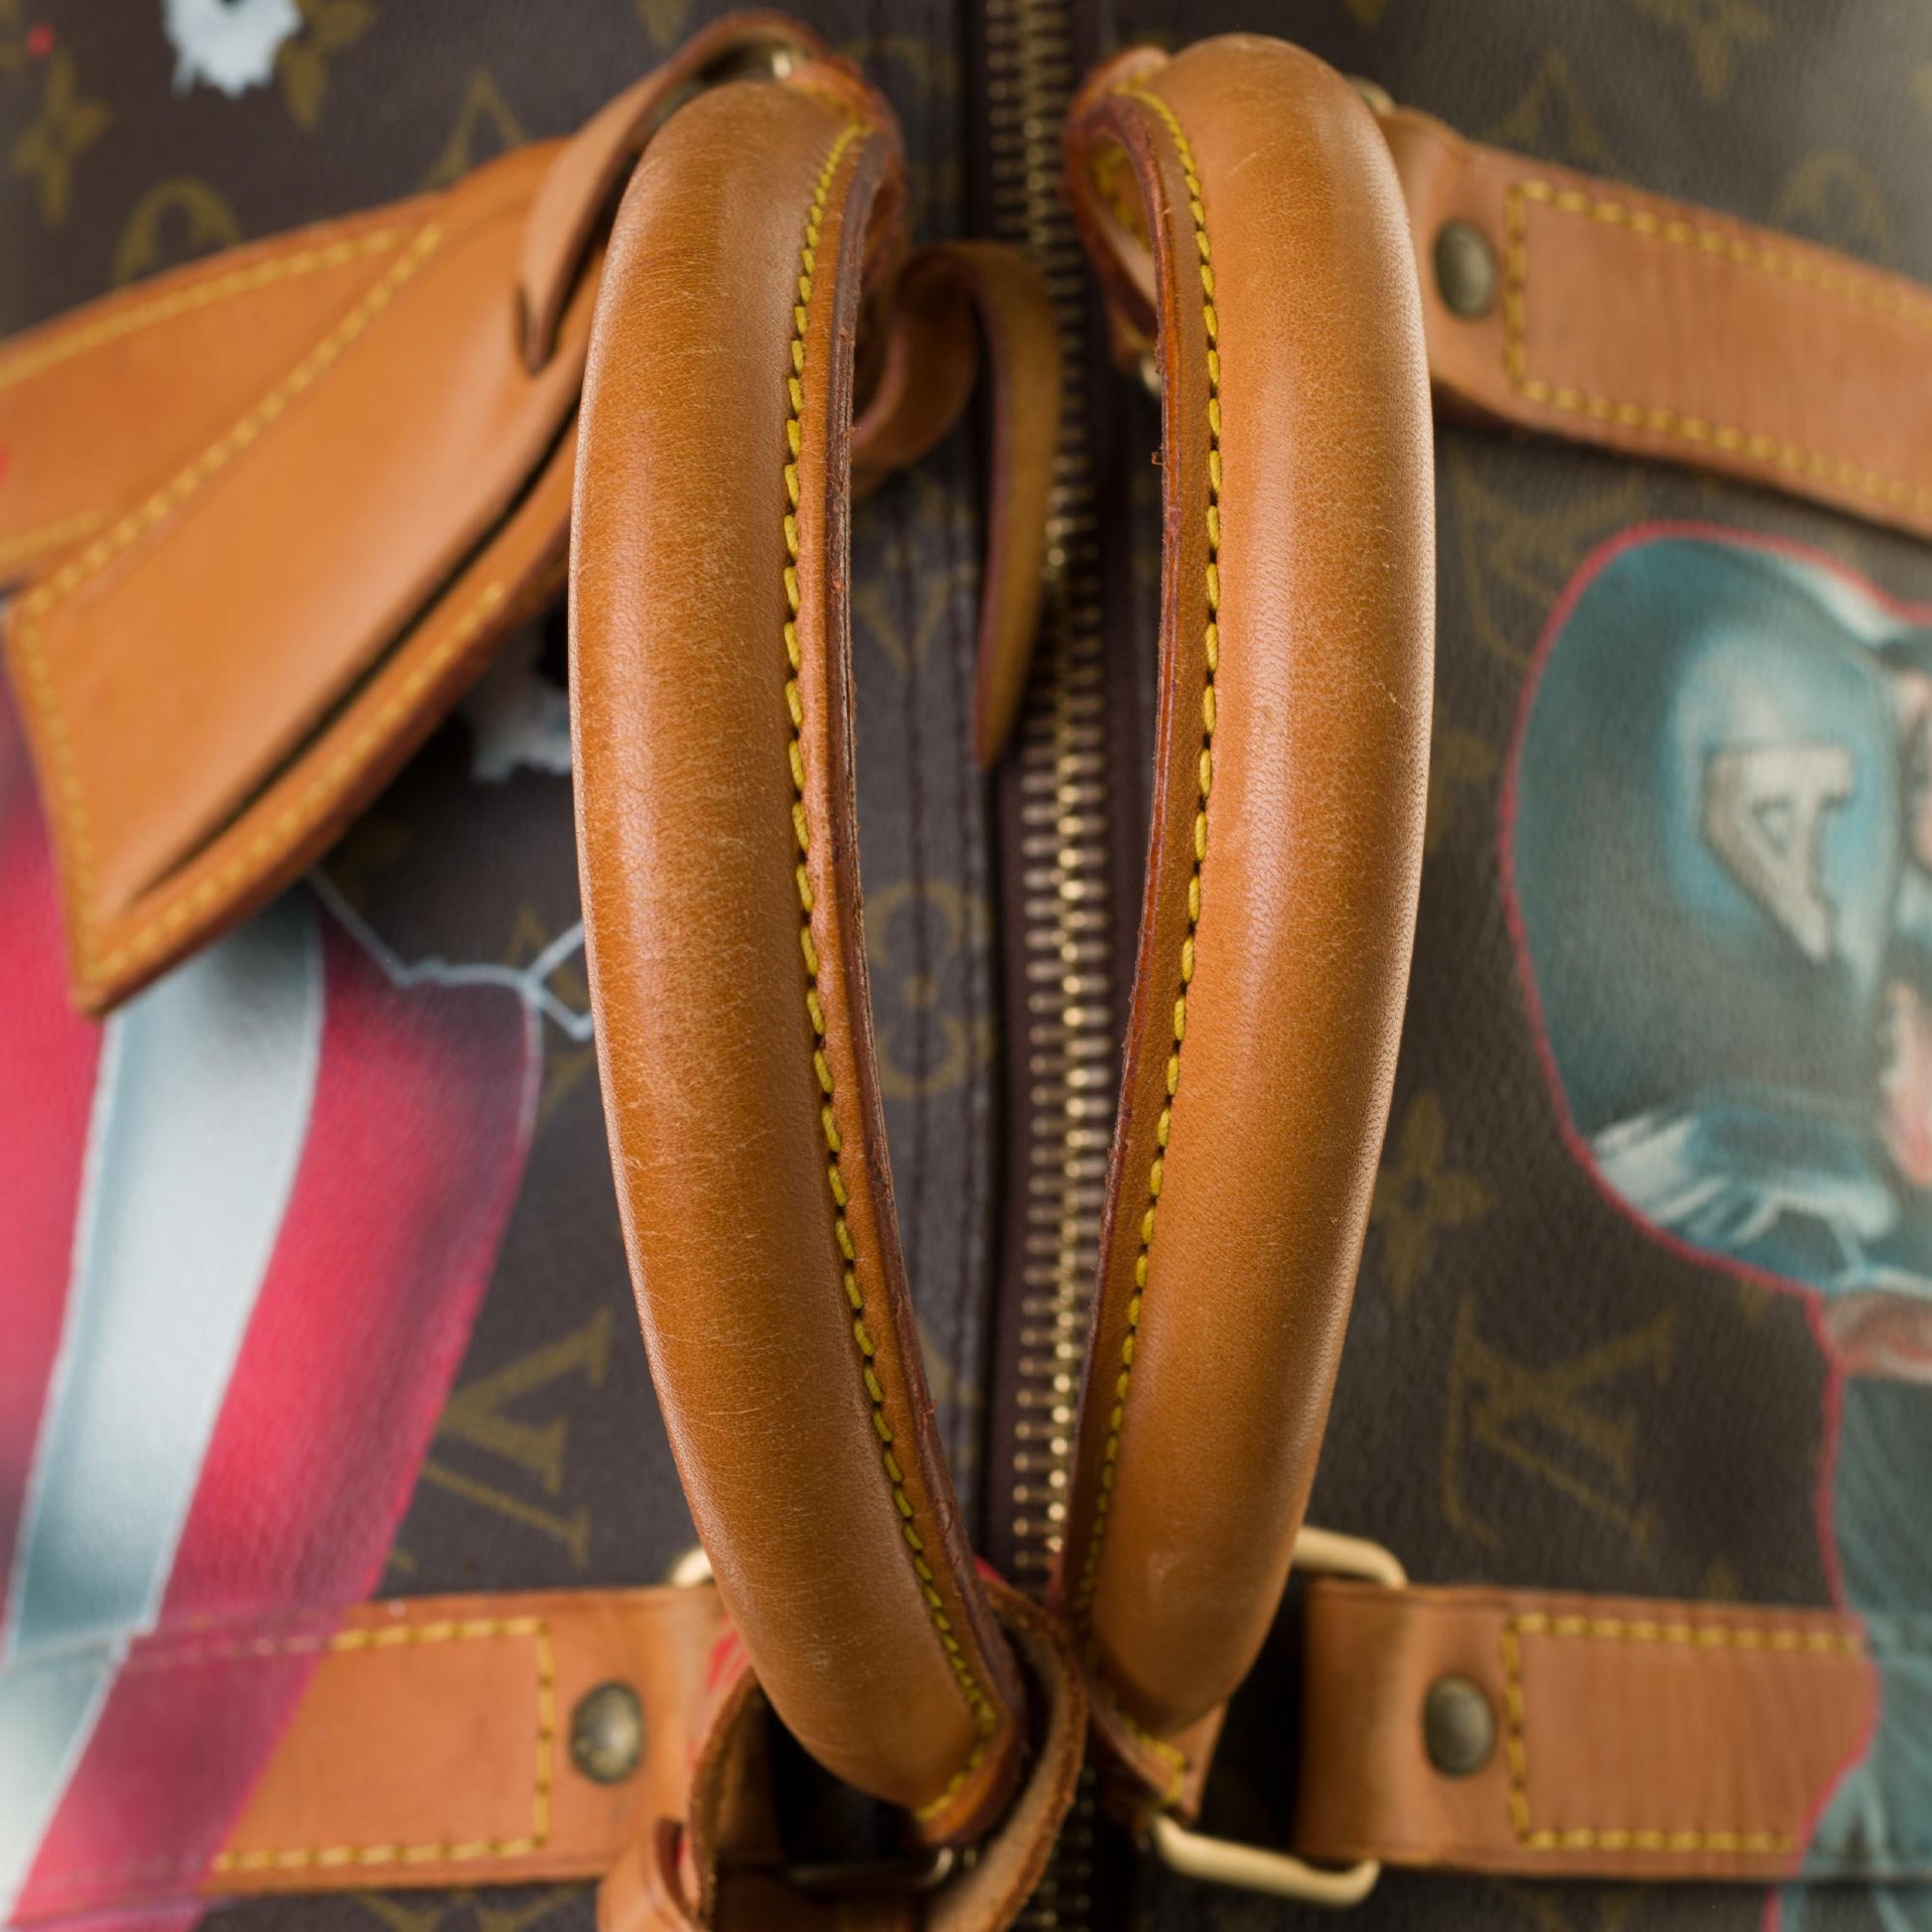 Exceptional Louis Vuitton Keepall travel bag 50 Captain America